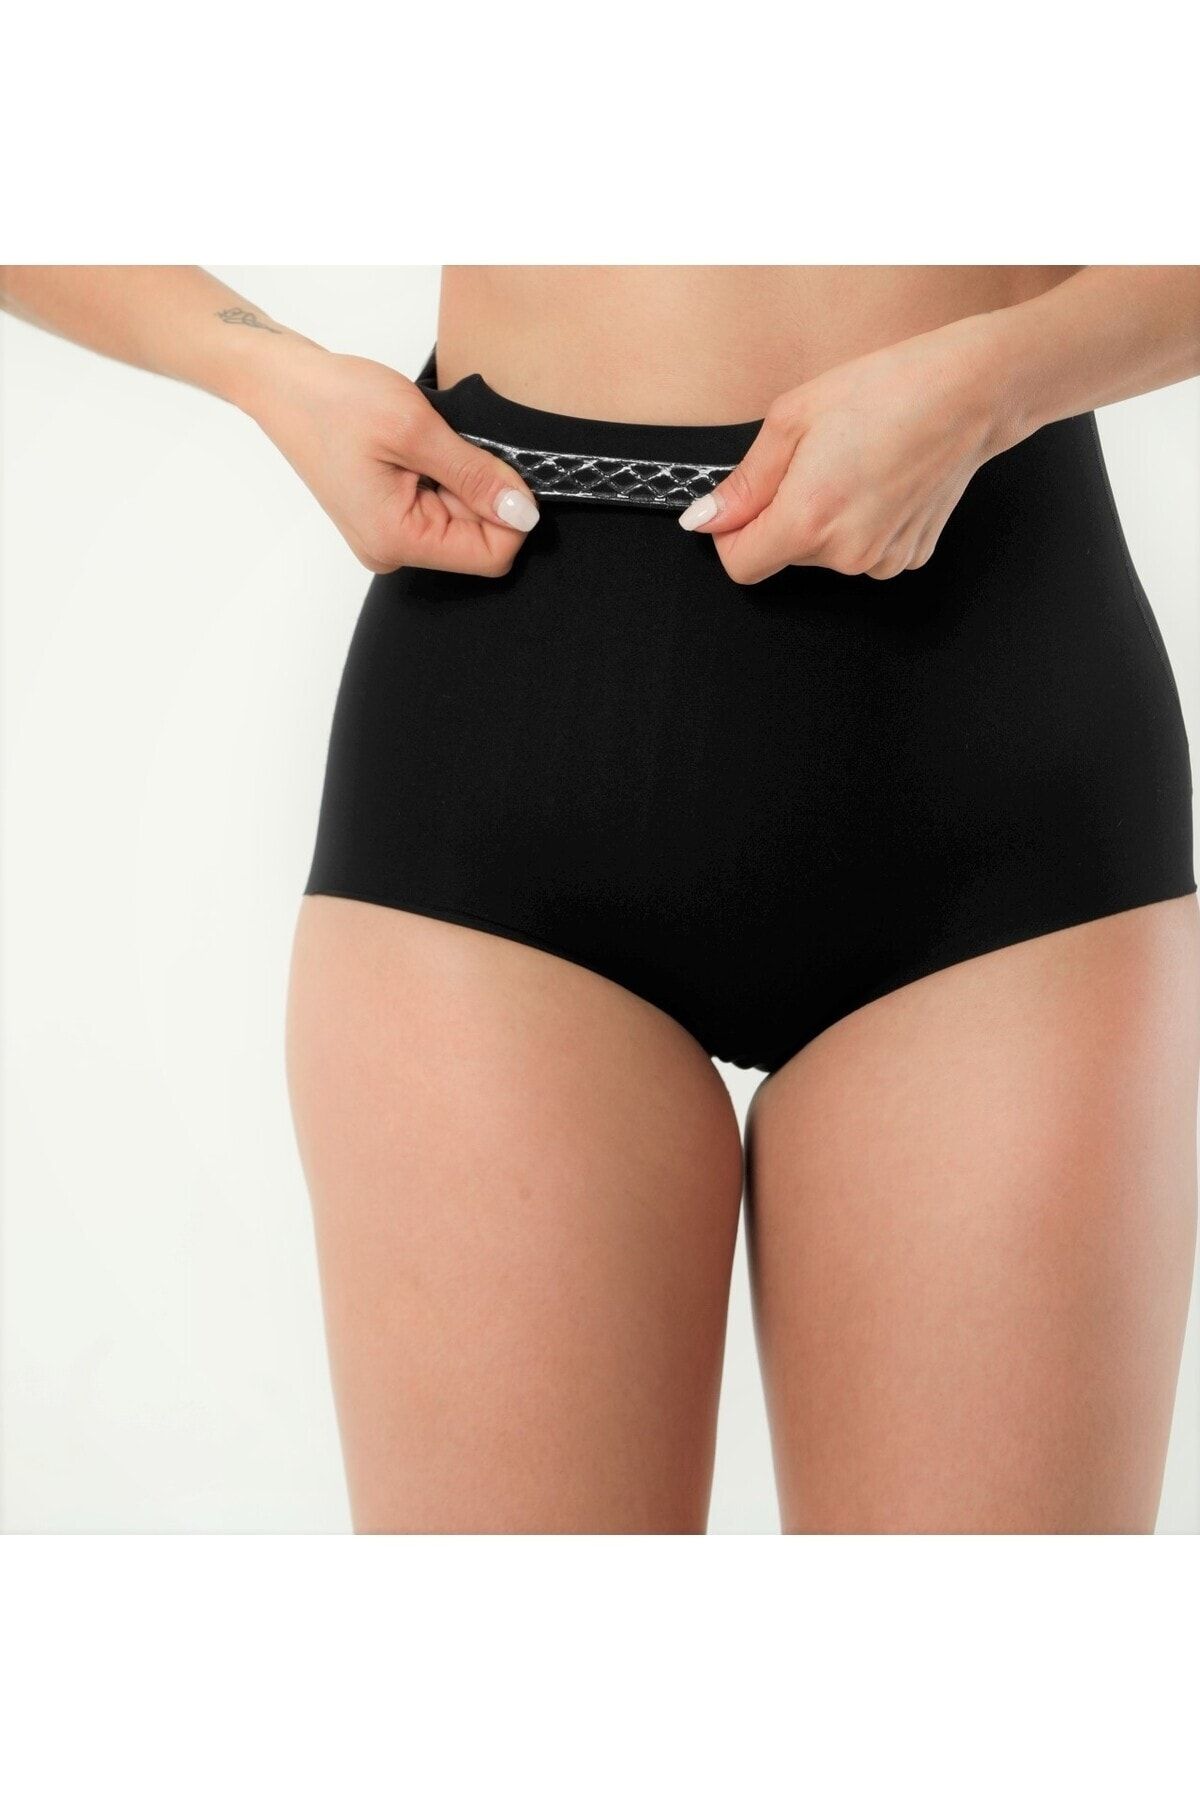 VASSARETTE WOMEN'S INVISIBLY Smooth Slip Short Panty, White ,Black